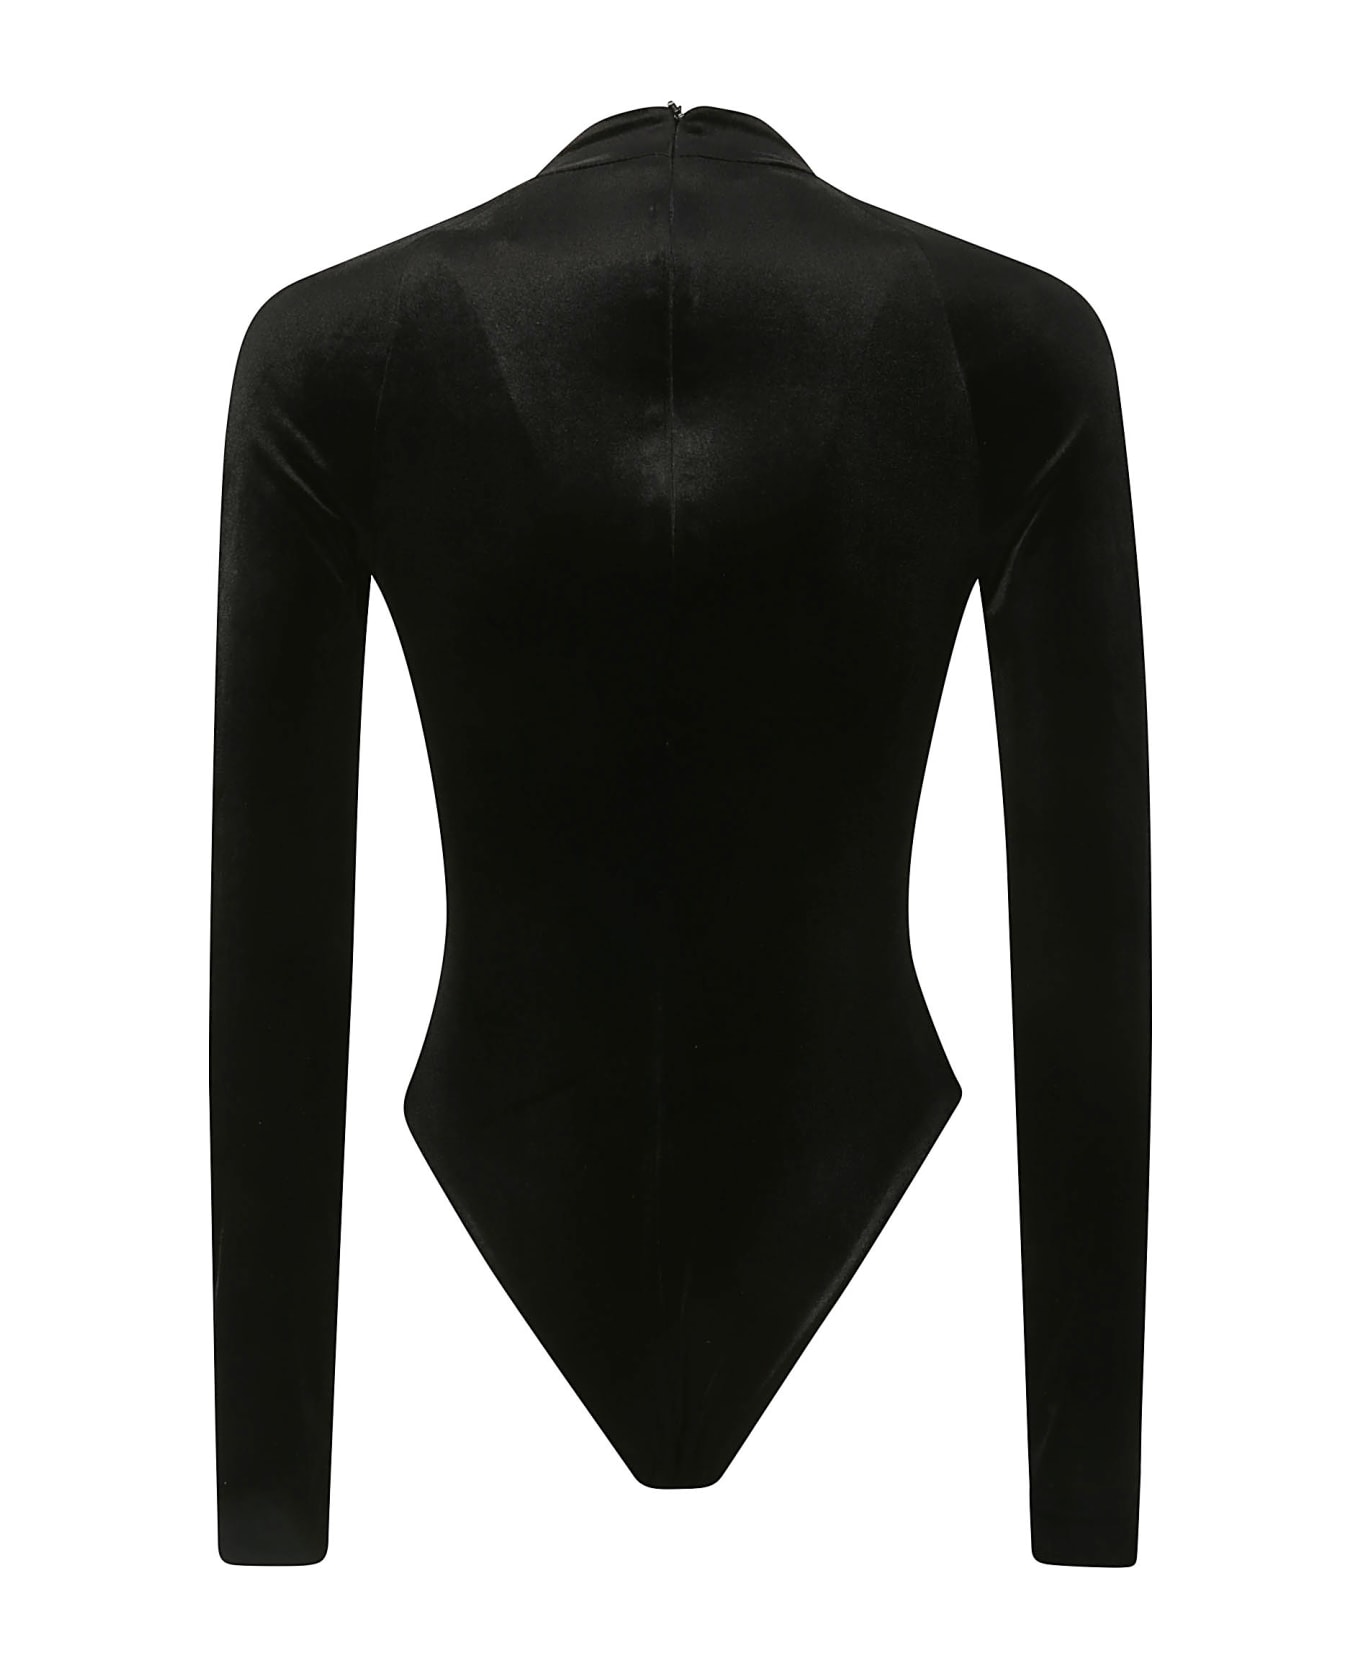 16arlington Valon Bodysuit - BLACK ボディスーツ